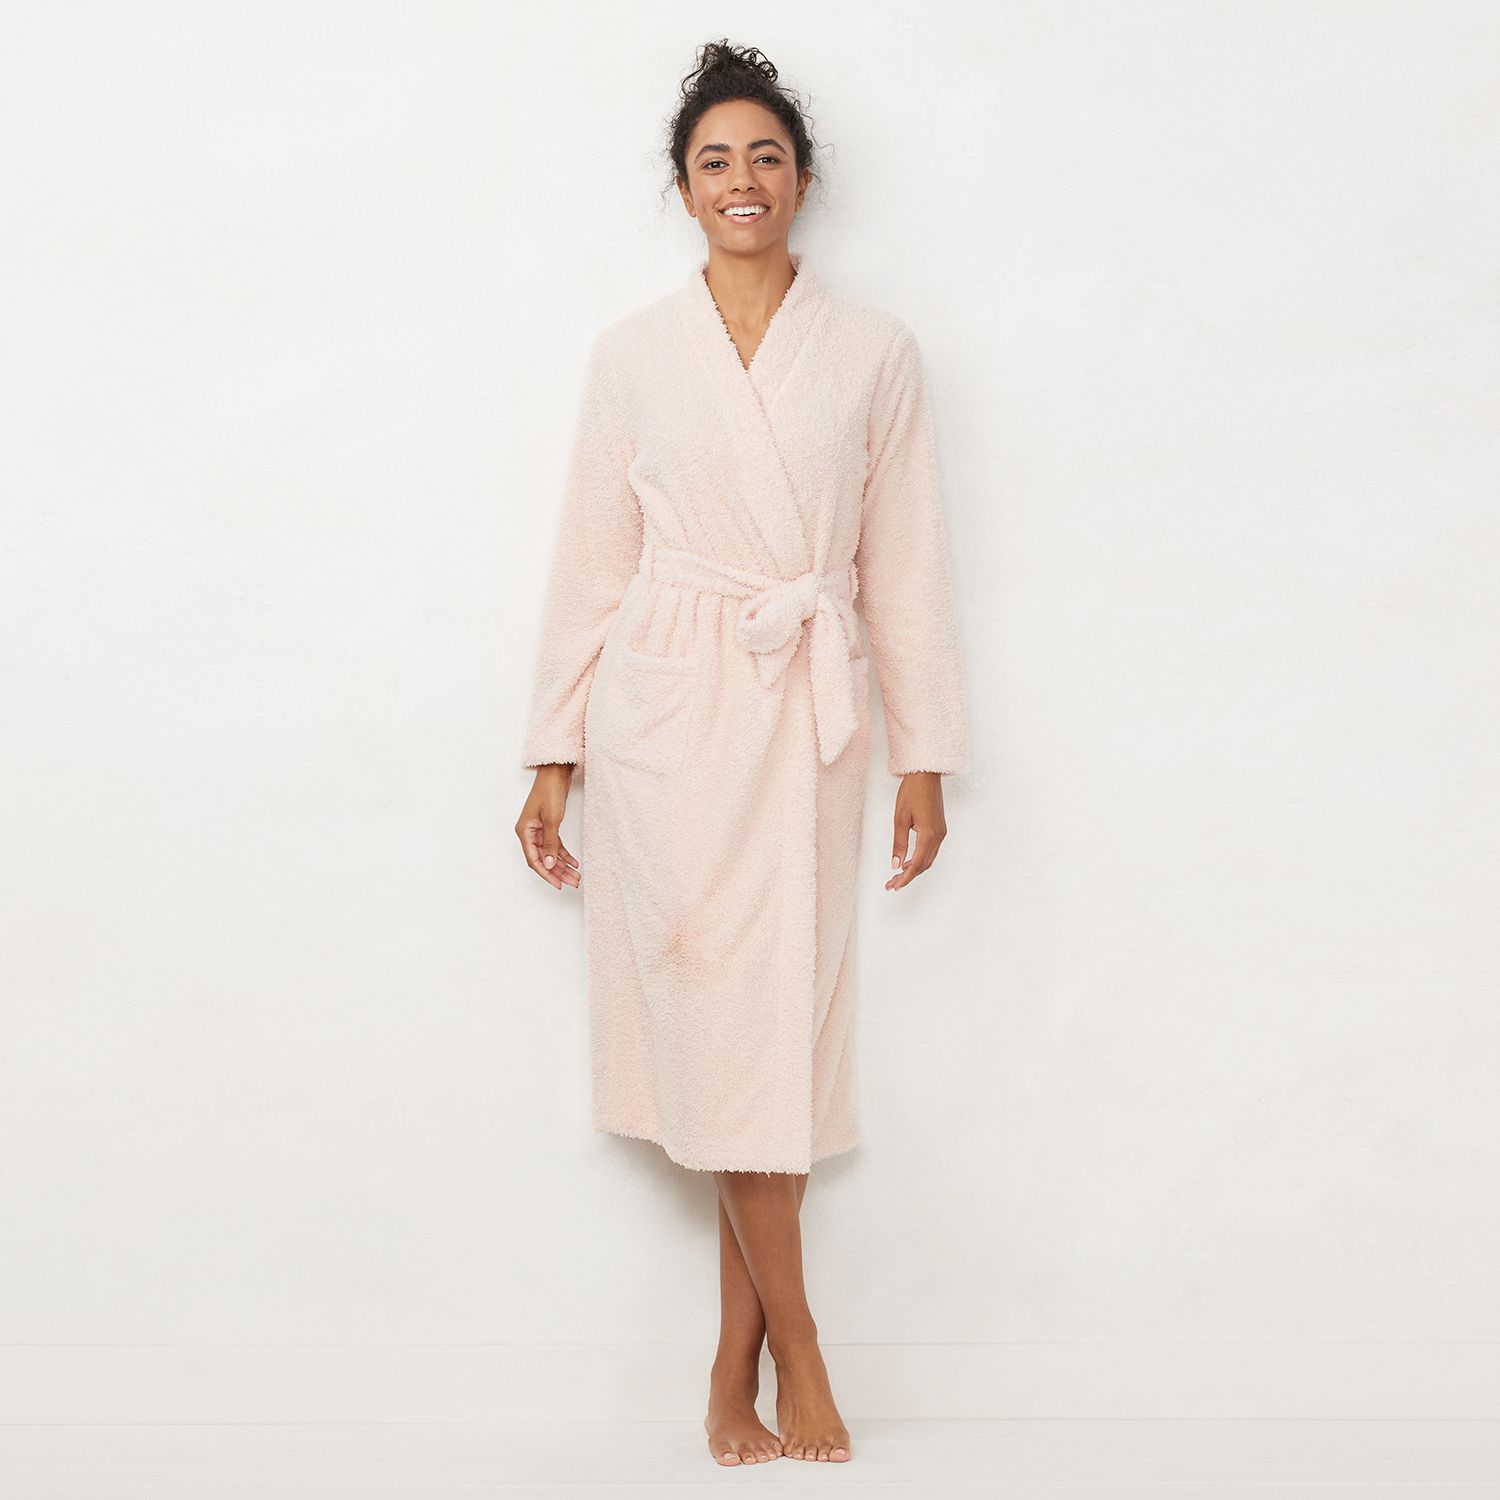 Image for LC Lauren Conrad Women's Cozy Fleece Long Wrap Robe at Kohl's.